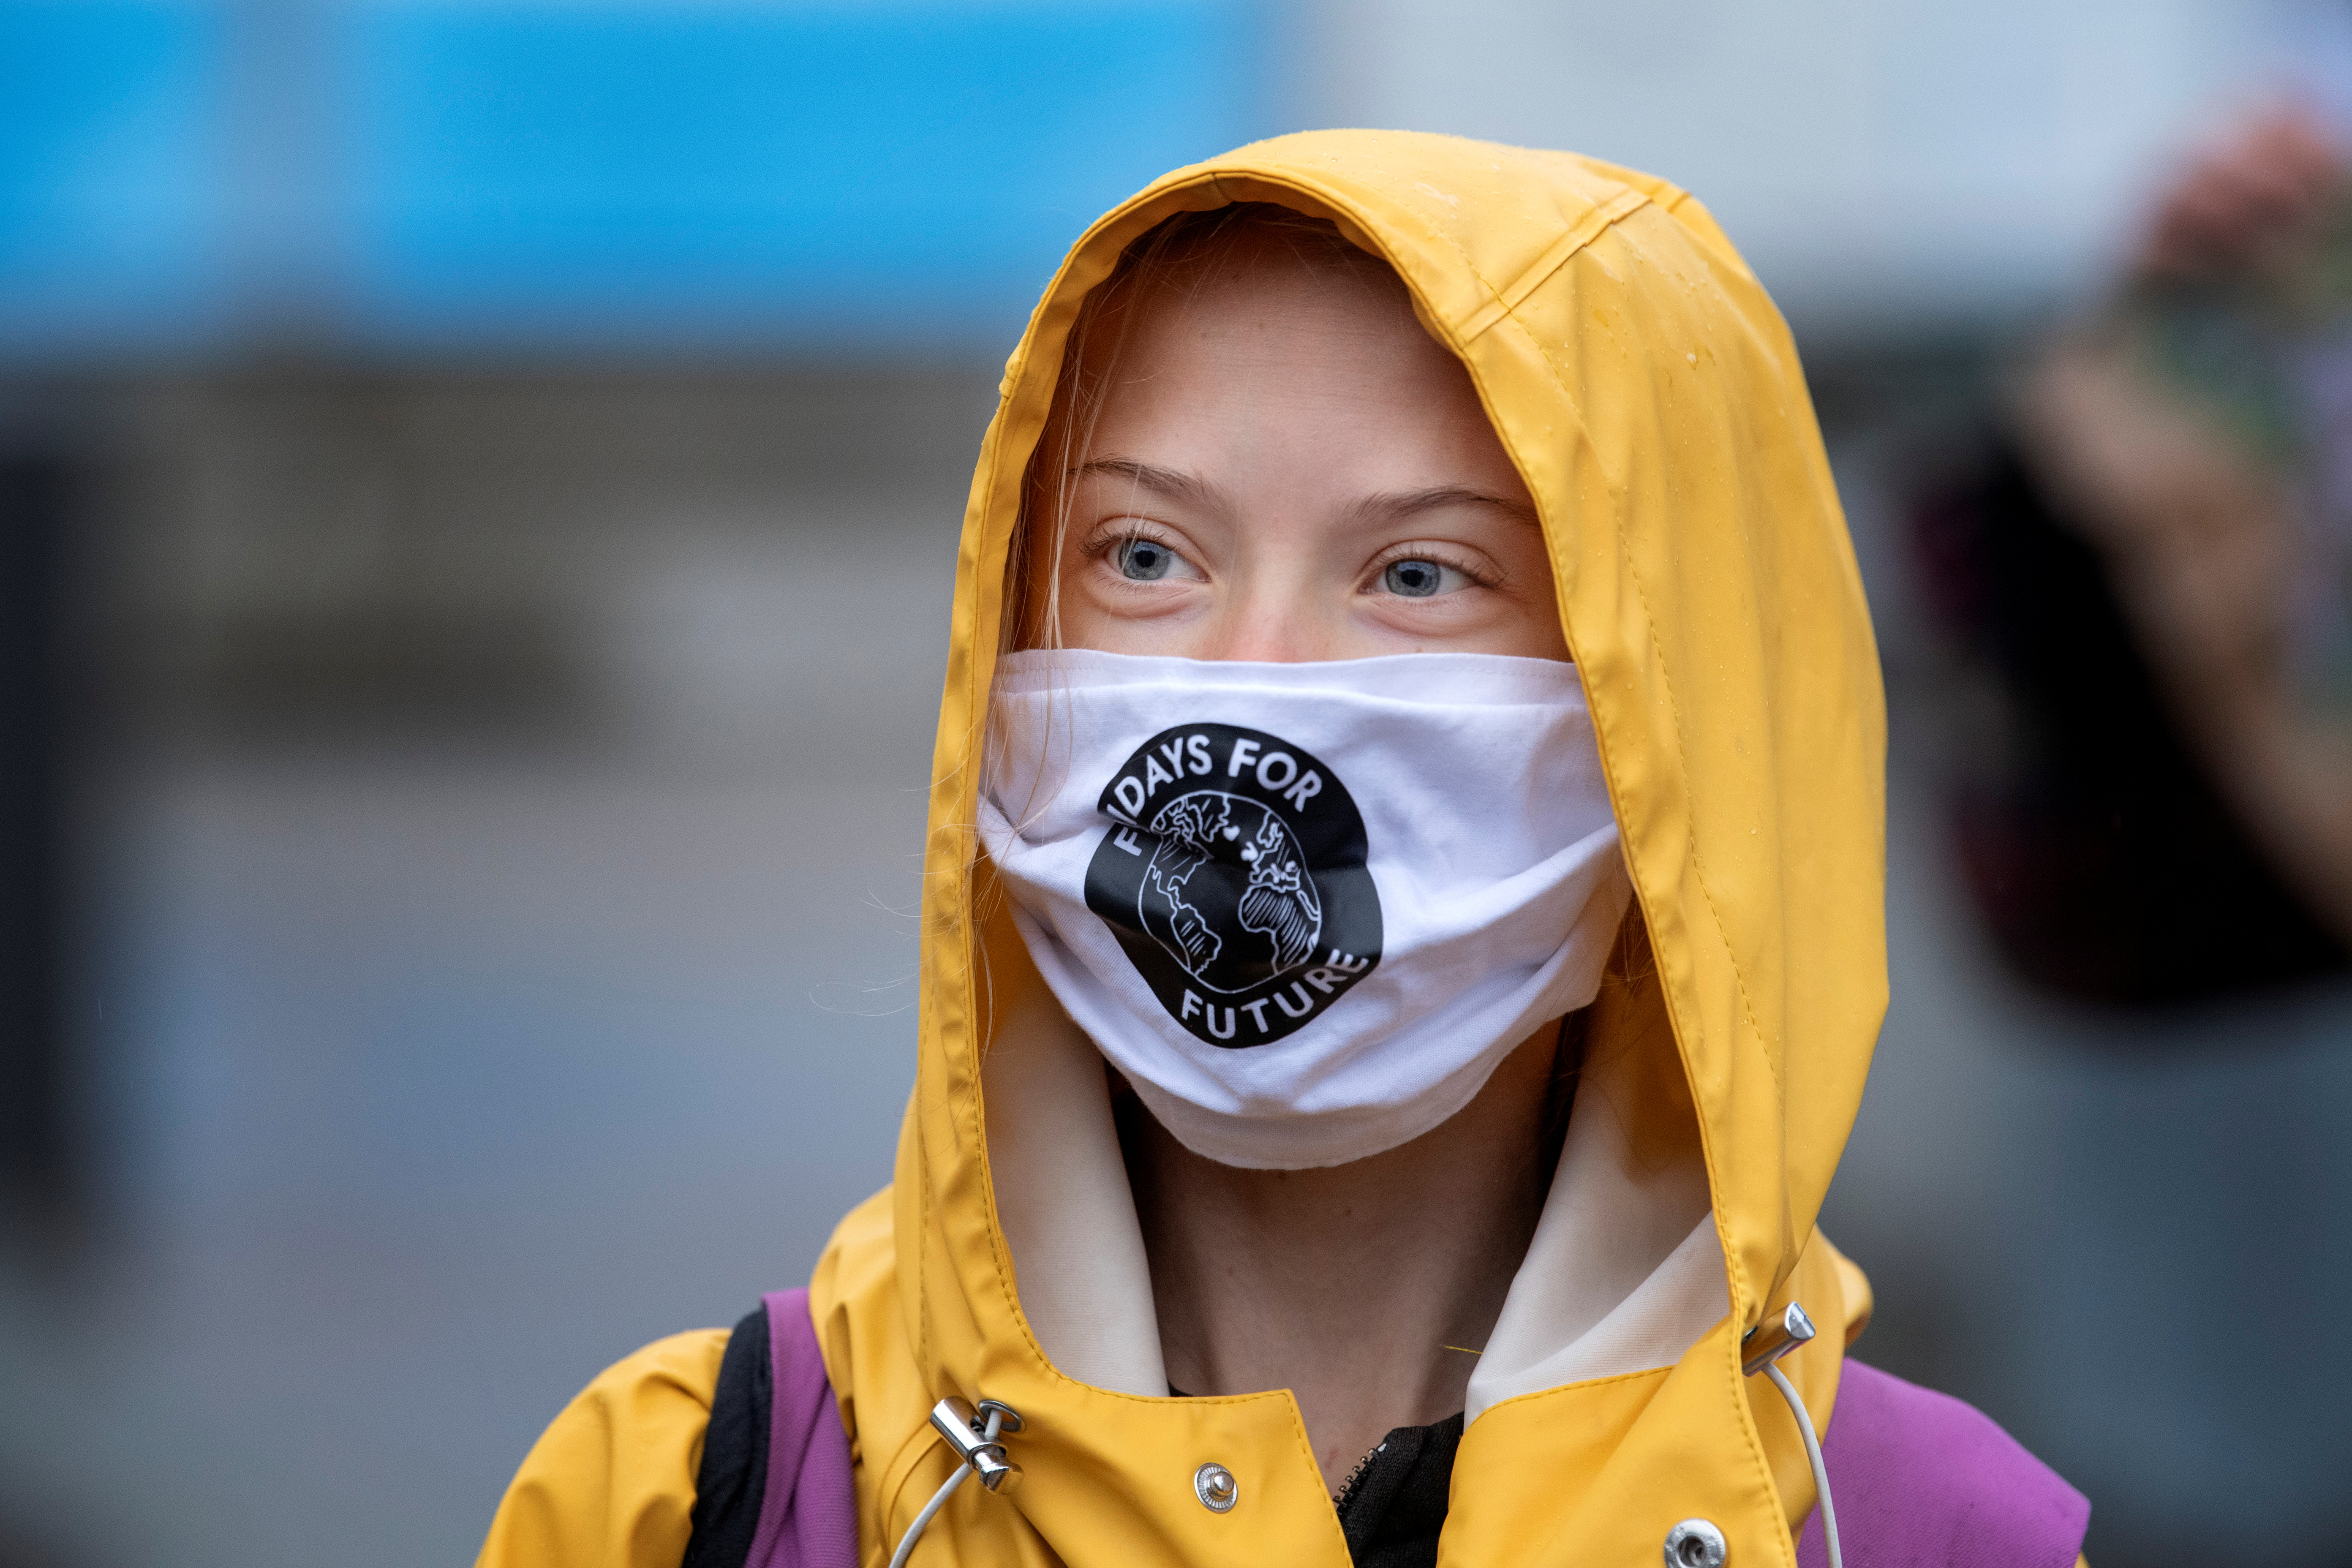 La activista climática Greta Thunberg expresa su apoyo a Biden